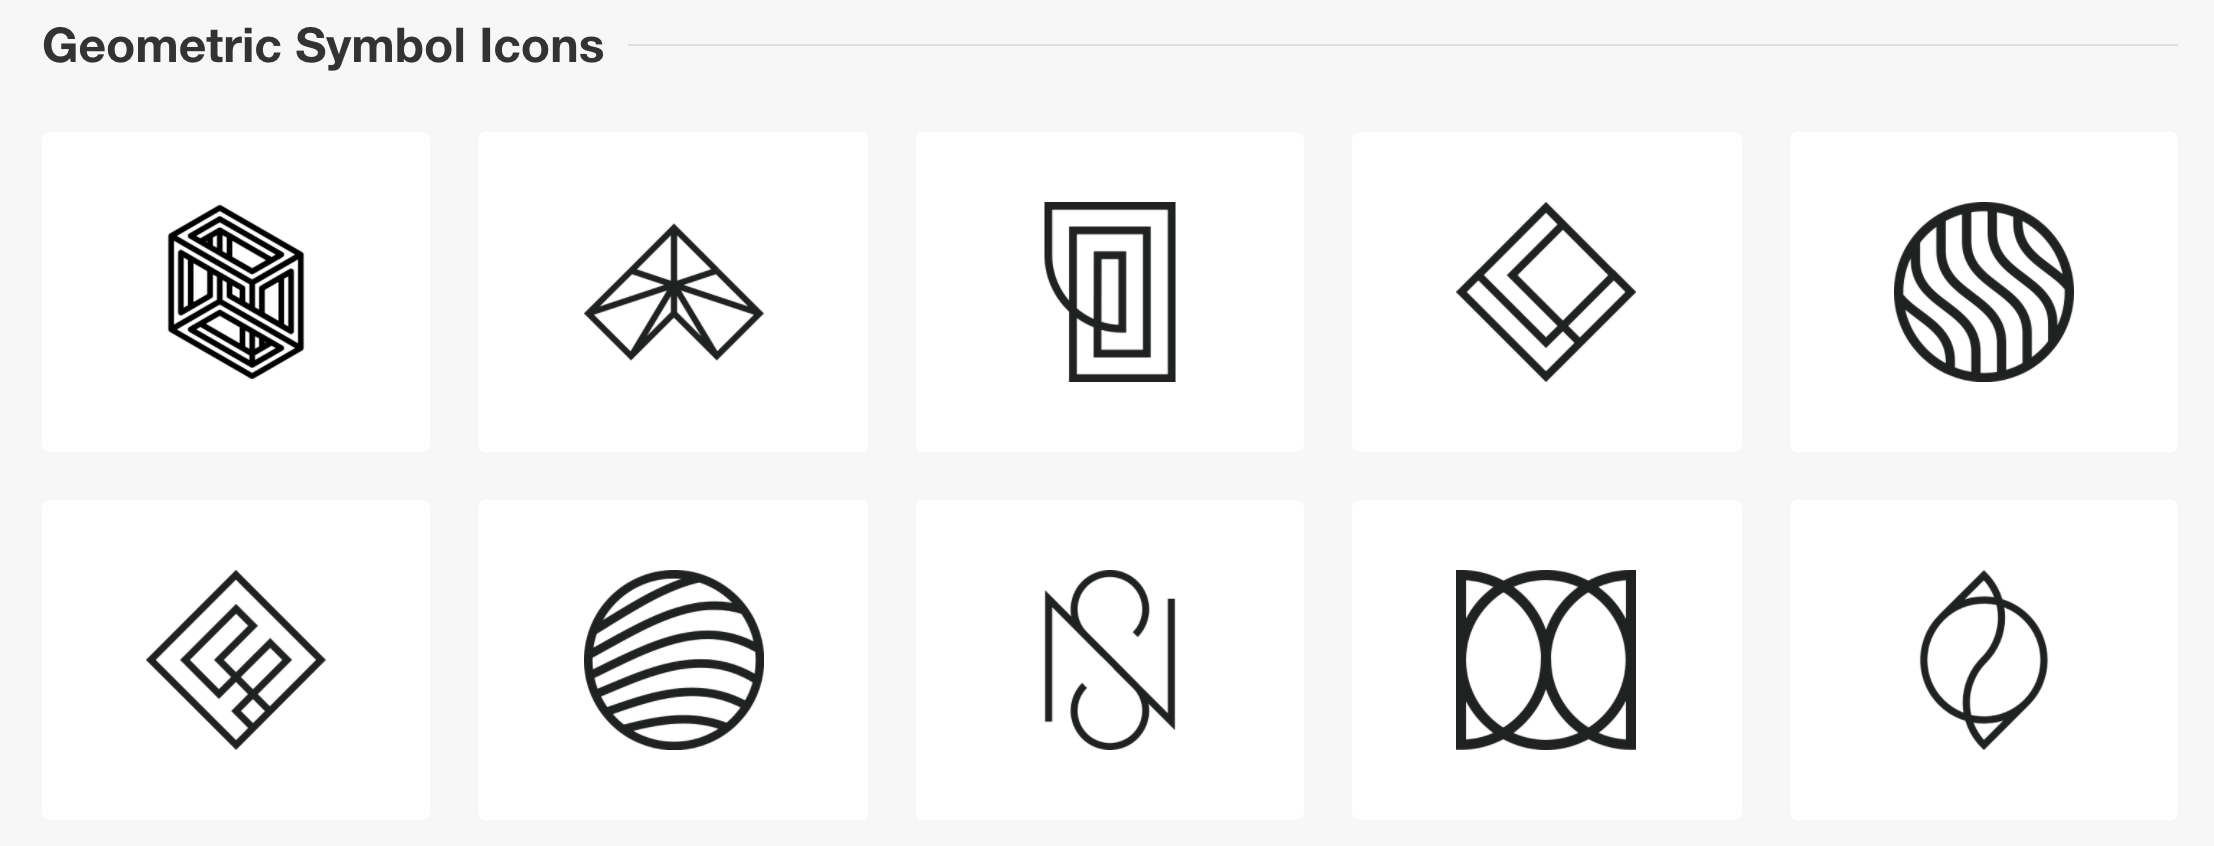 Handdrawn minimalistic balancing shapes logo. Simple geometric